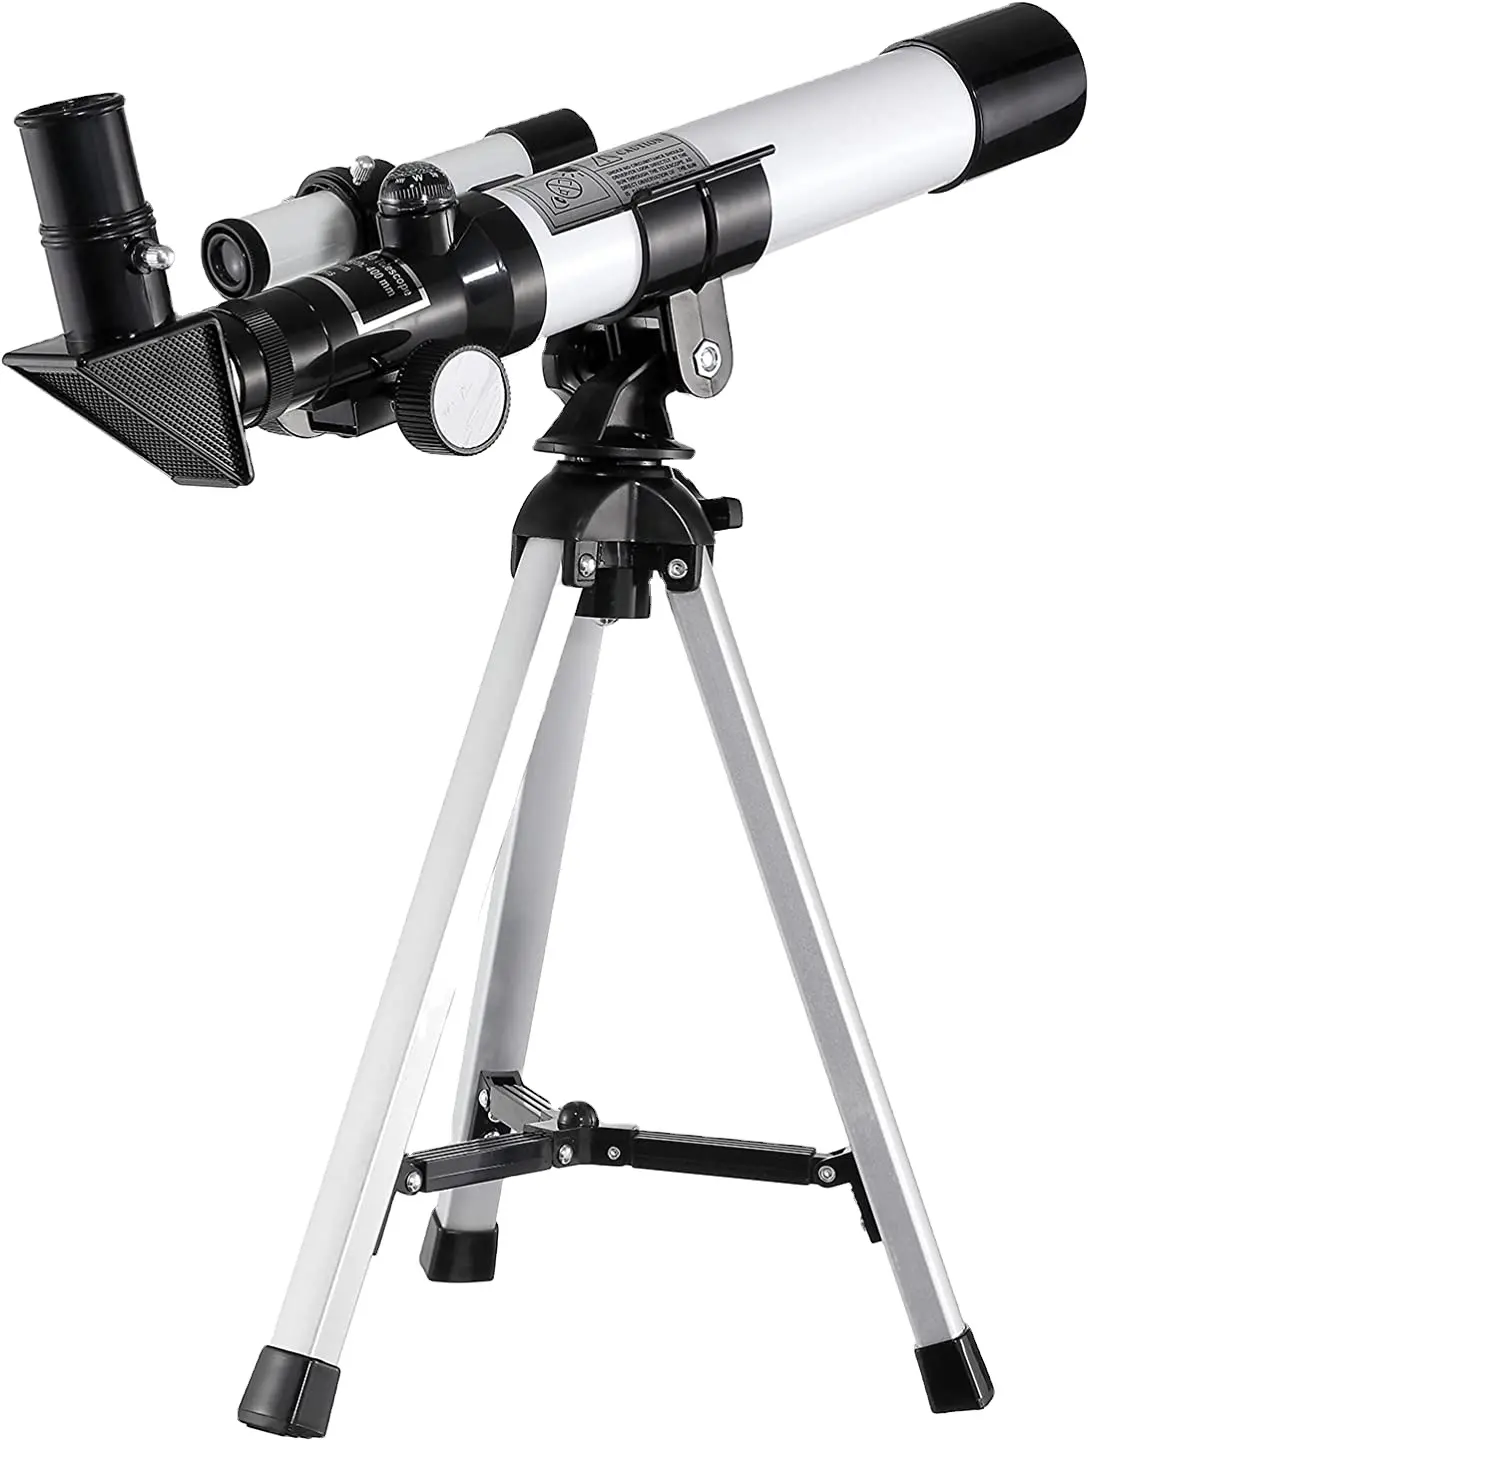 Binoculars for astronomy beginners